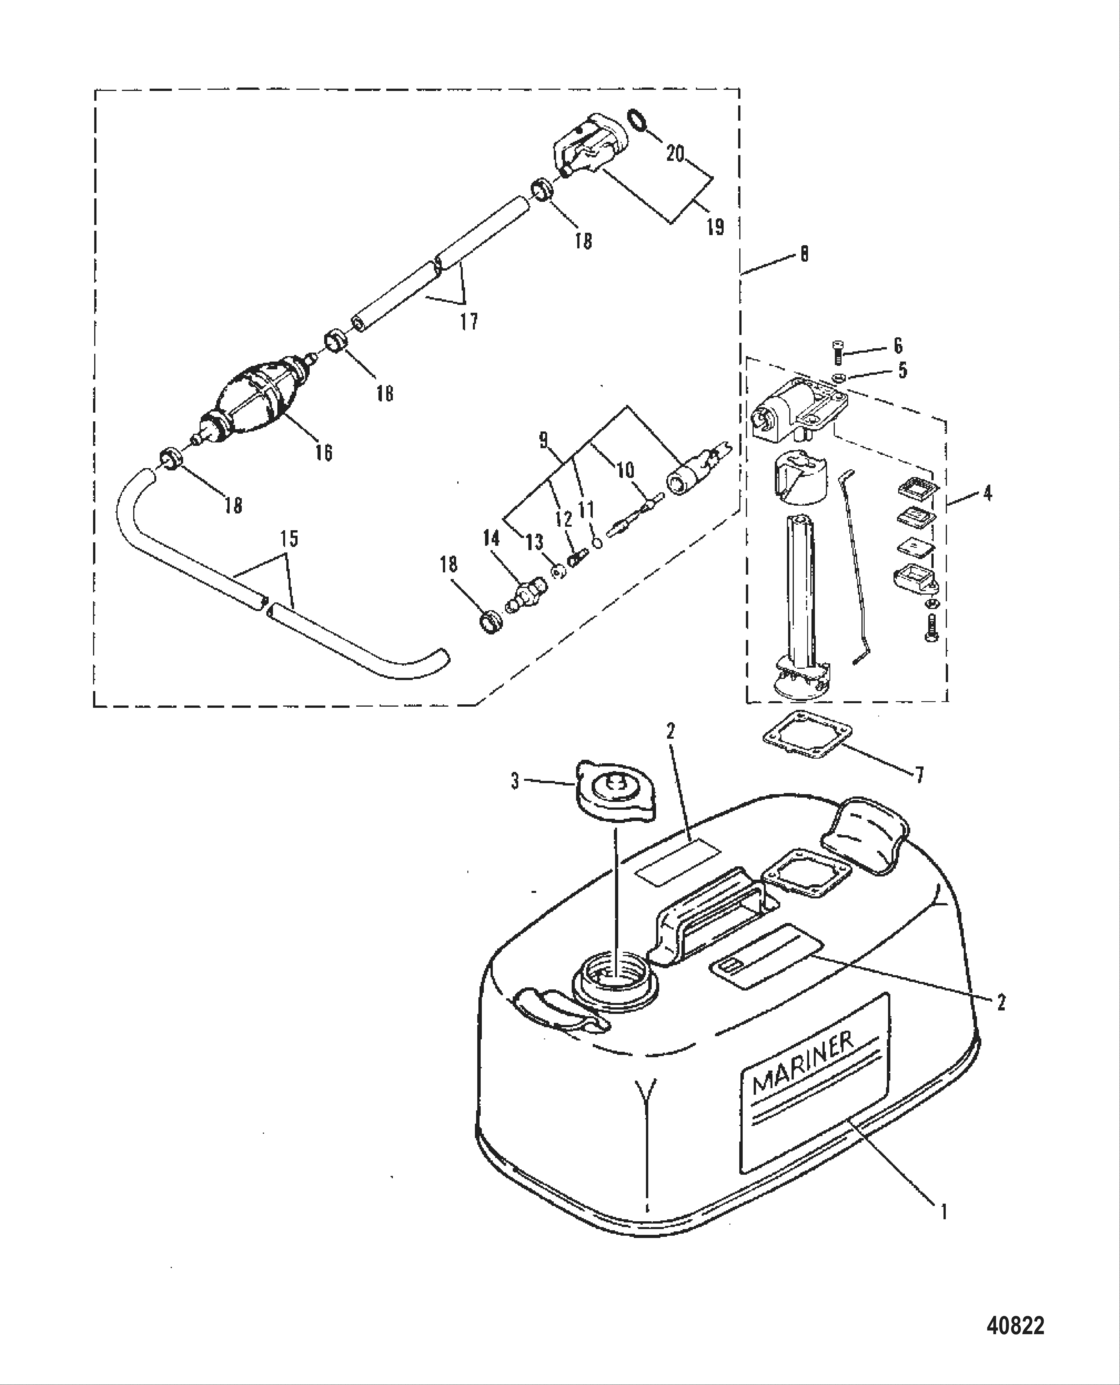 Fuel Tank And Fuel Line Assembly (Original Equipment)